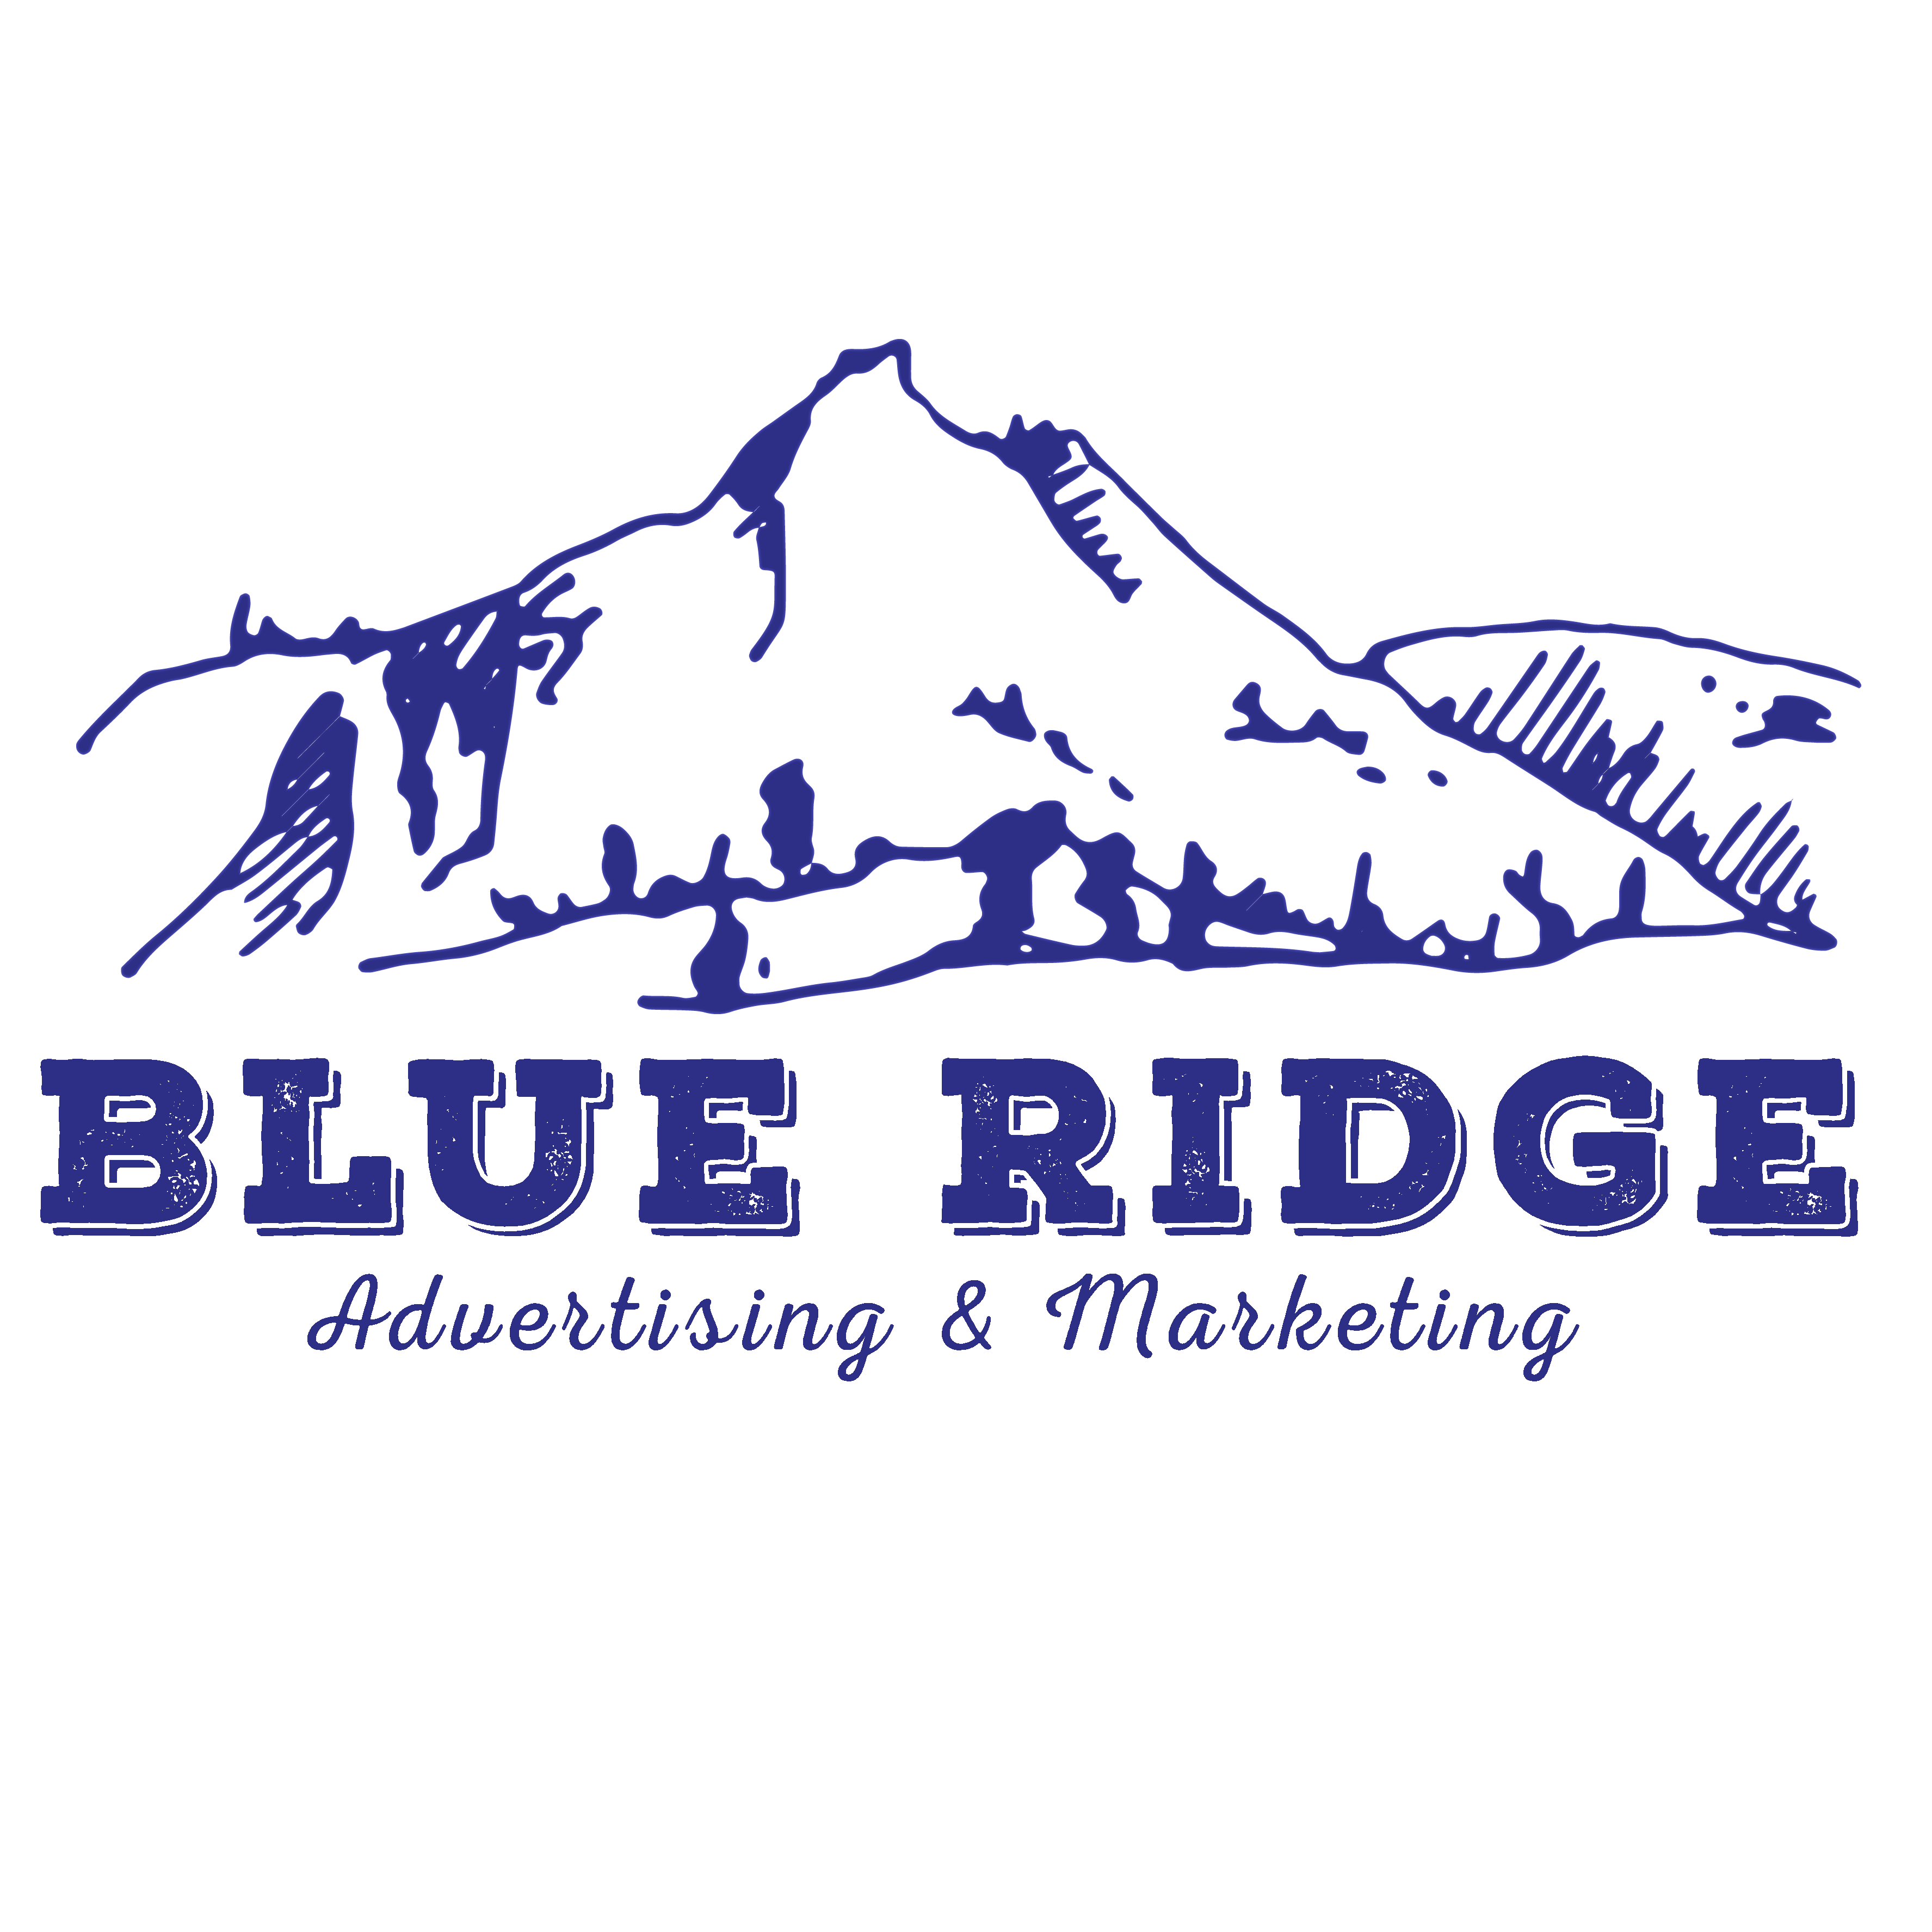 Blue Ridge Advertising & Marketing